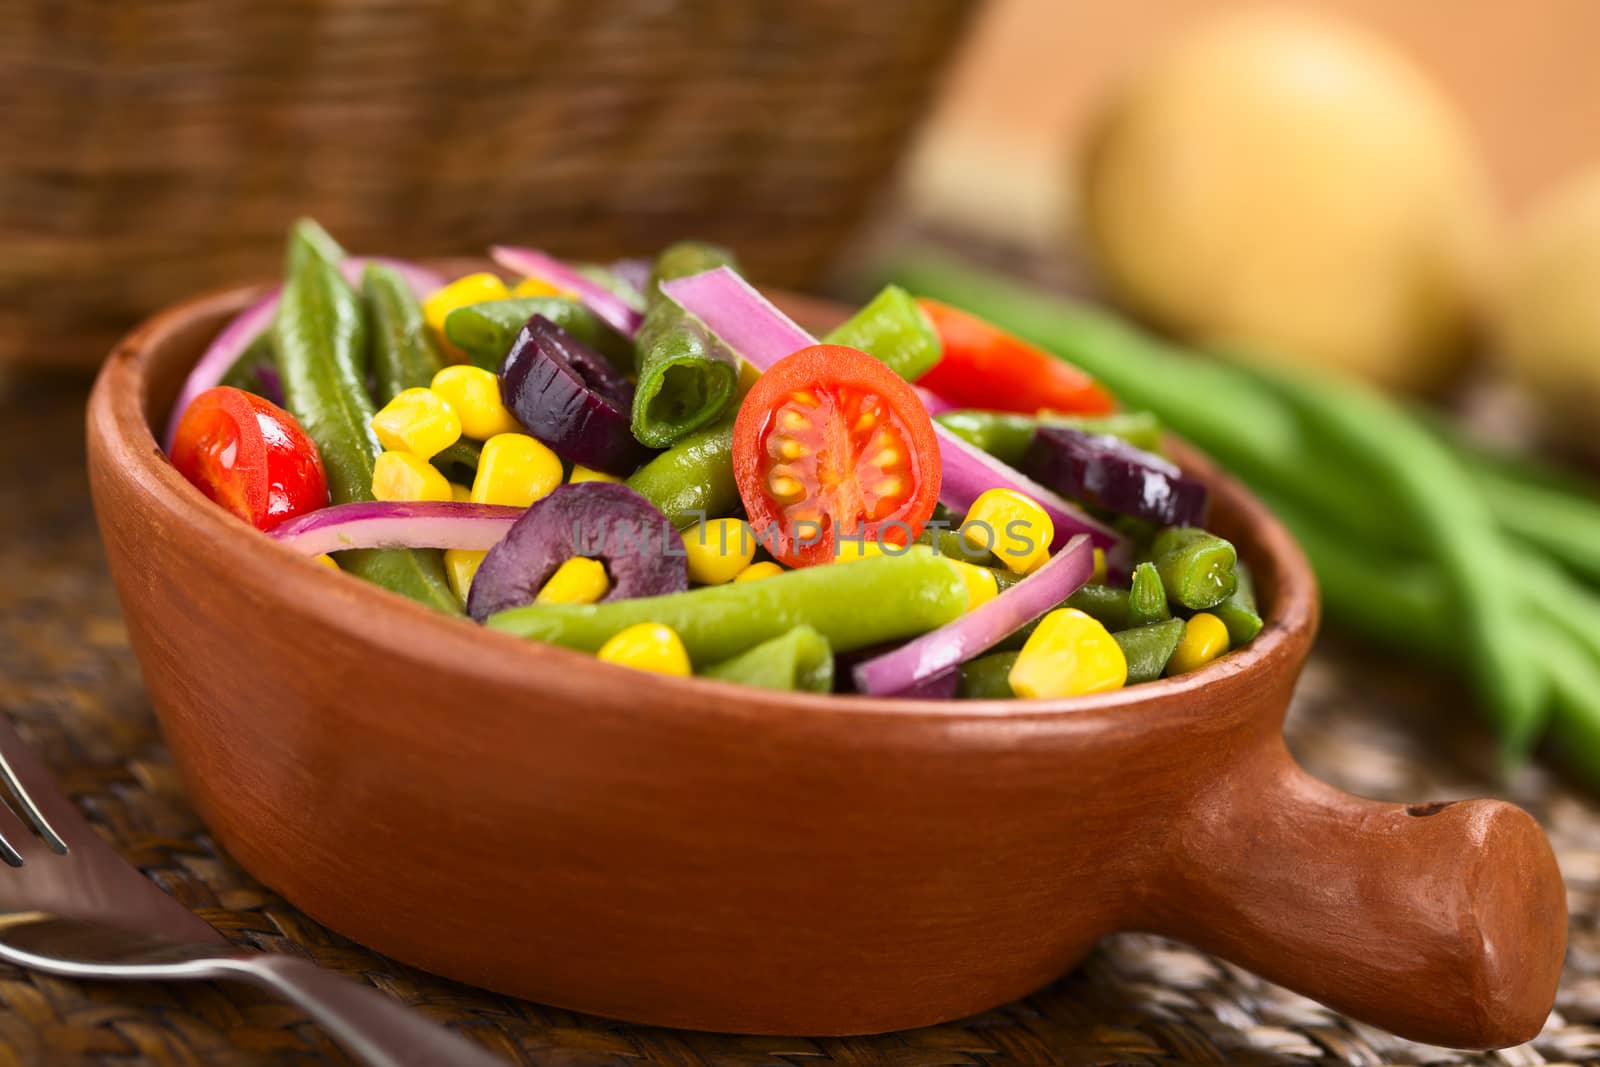 Colorful Green Bean Salad by ildi